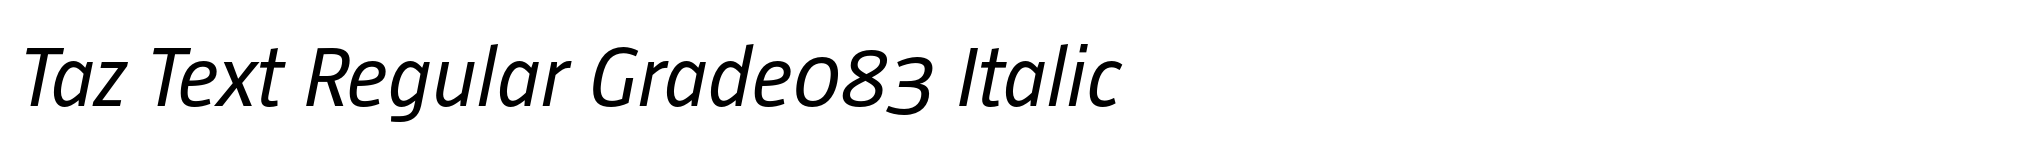 Taz Text Regular Grade083 Italic image